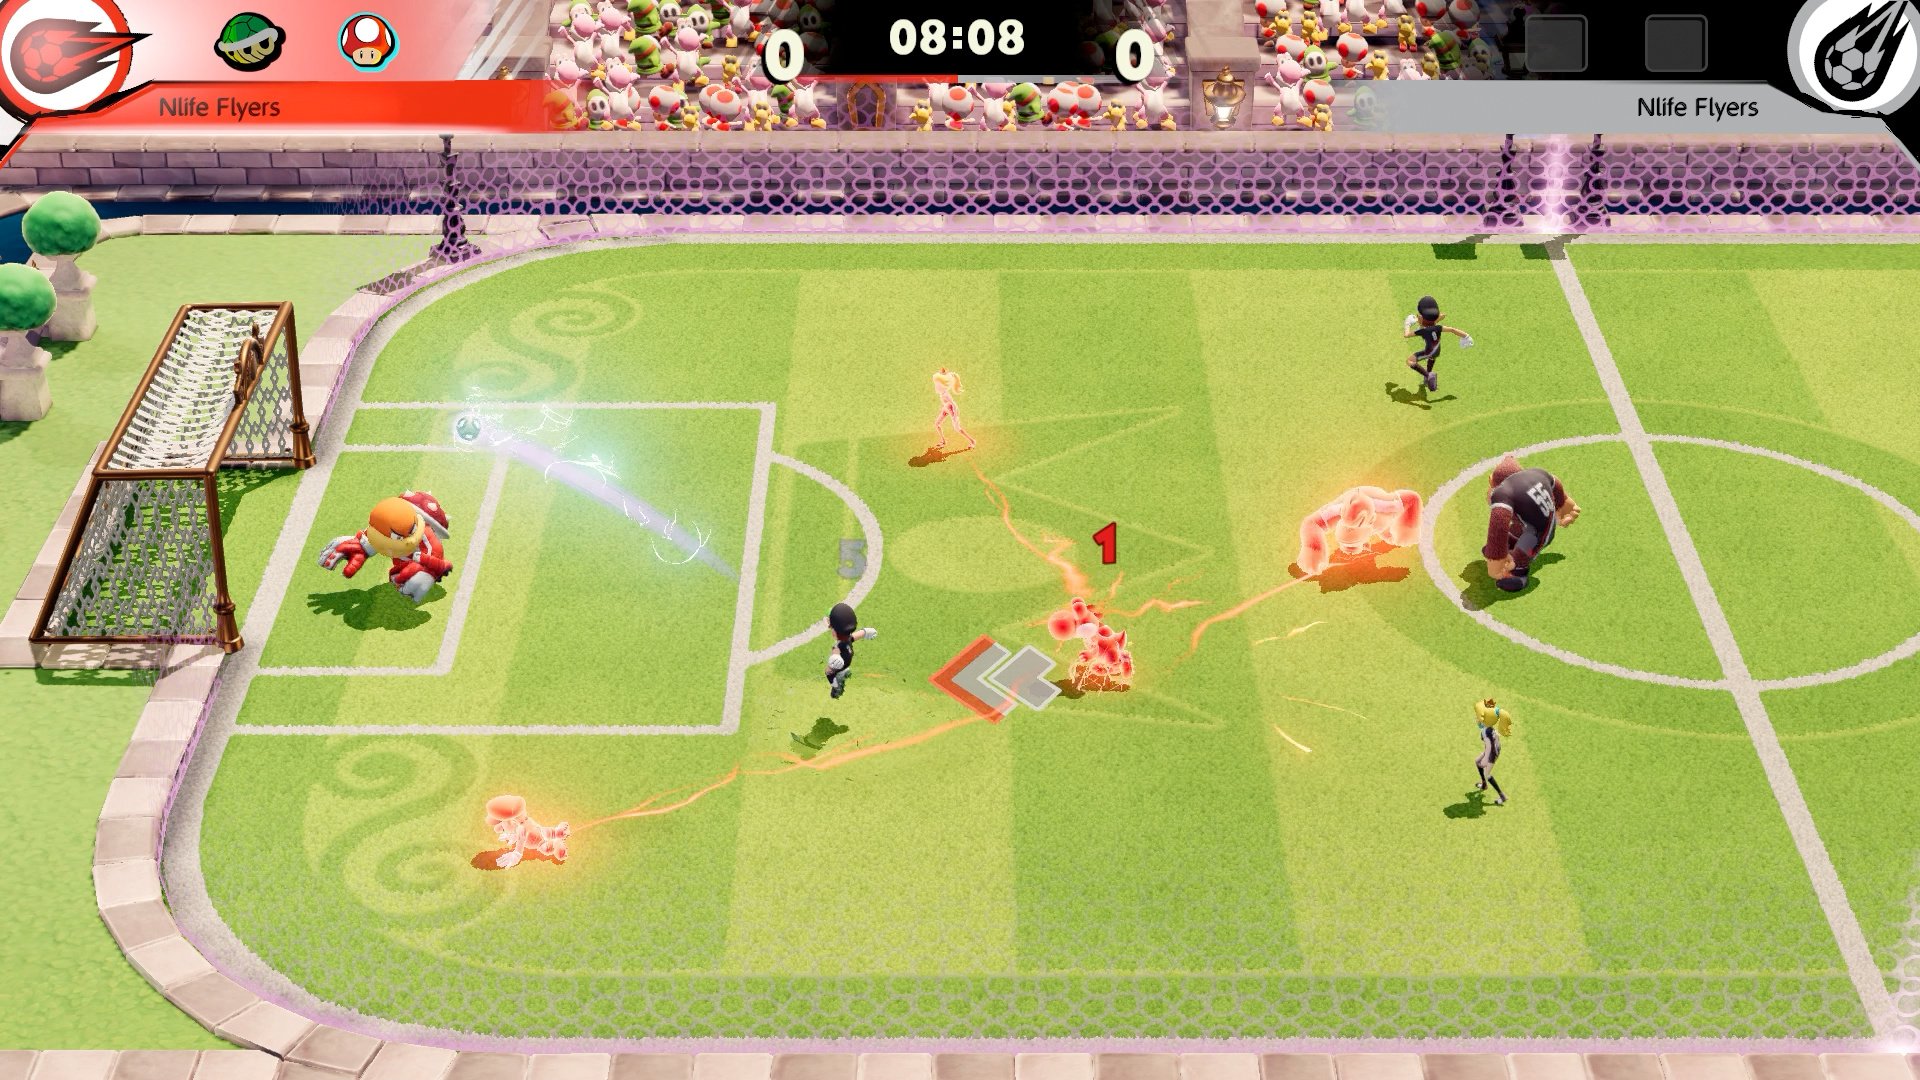 Super Soccer Blast - Metacritic